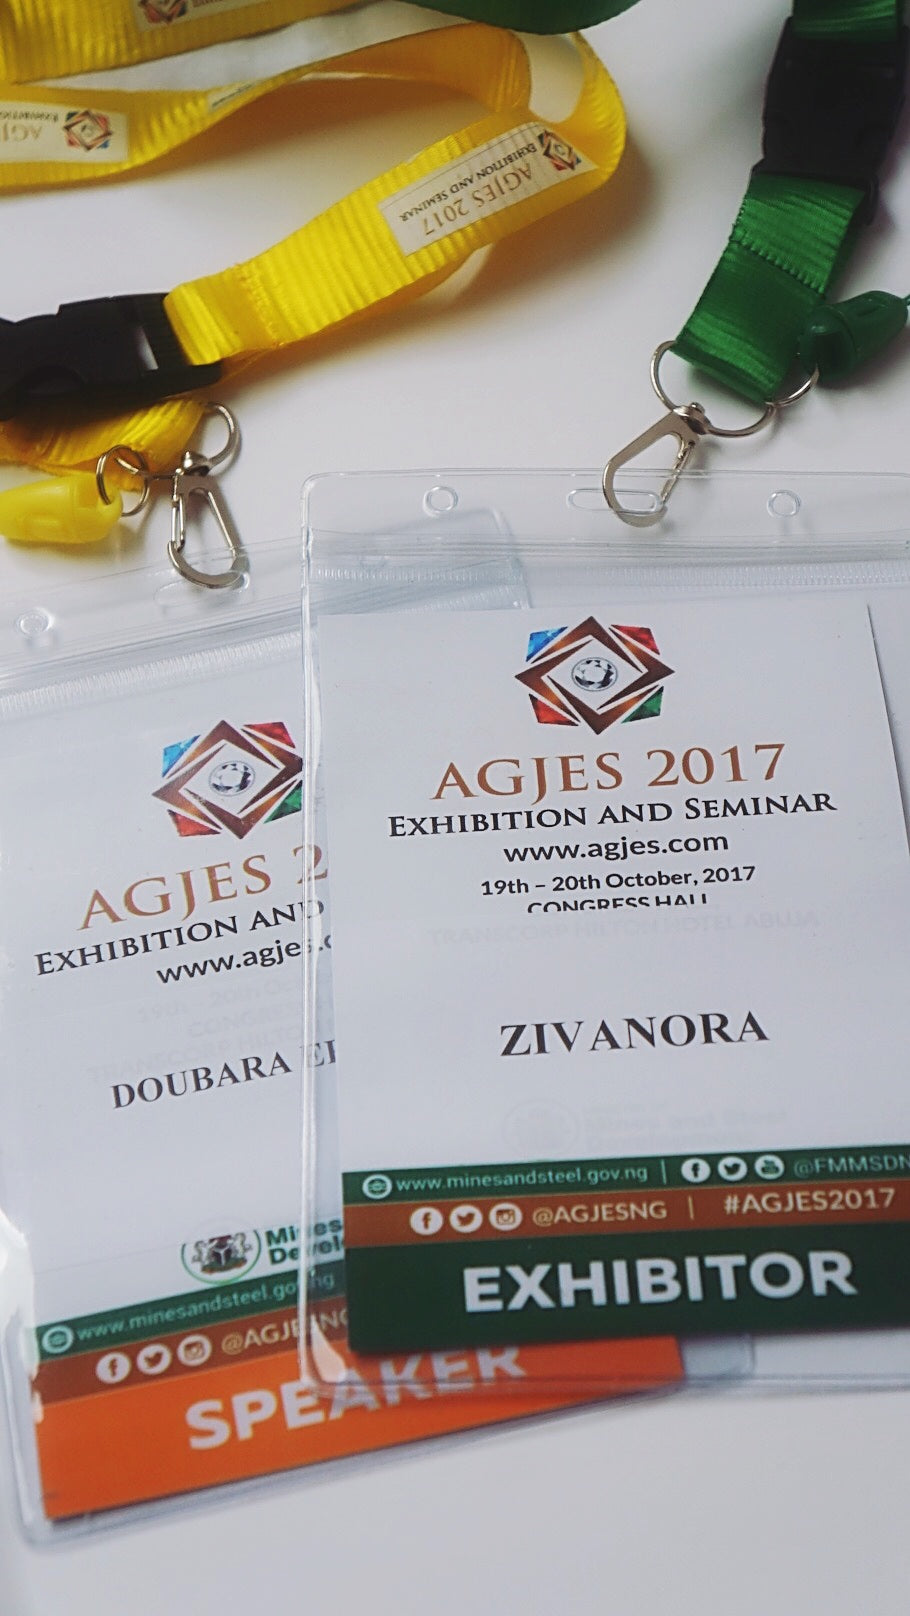 zivanora at AGJES 2017